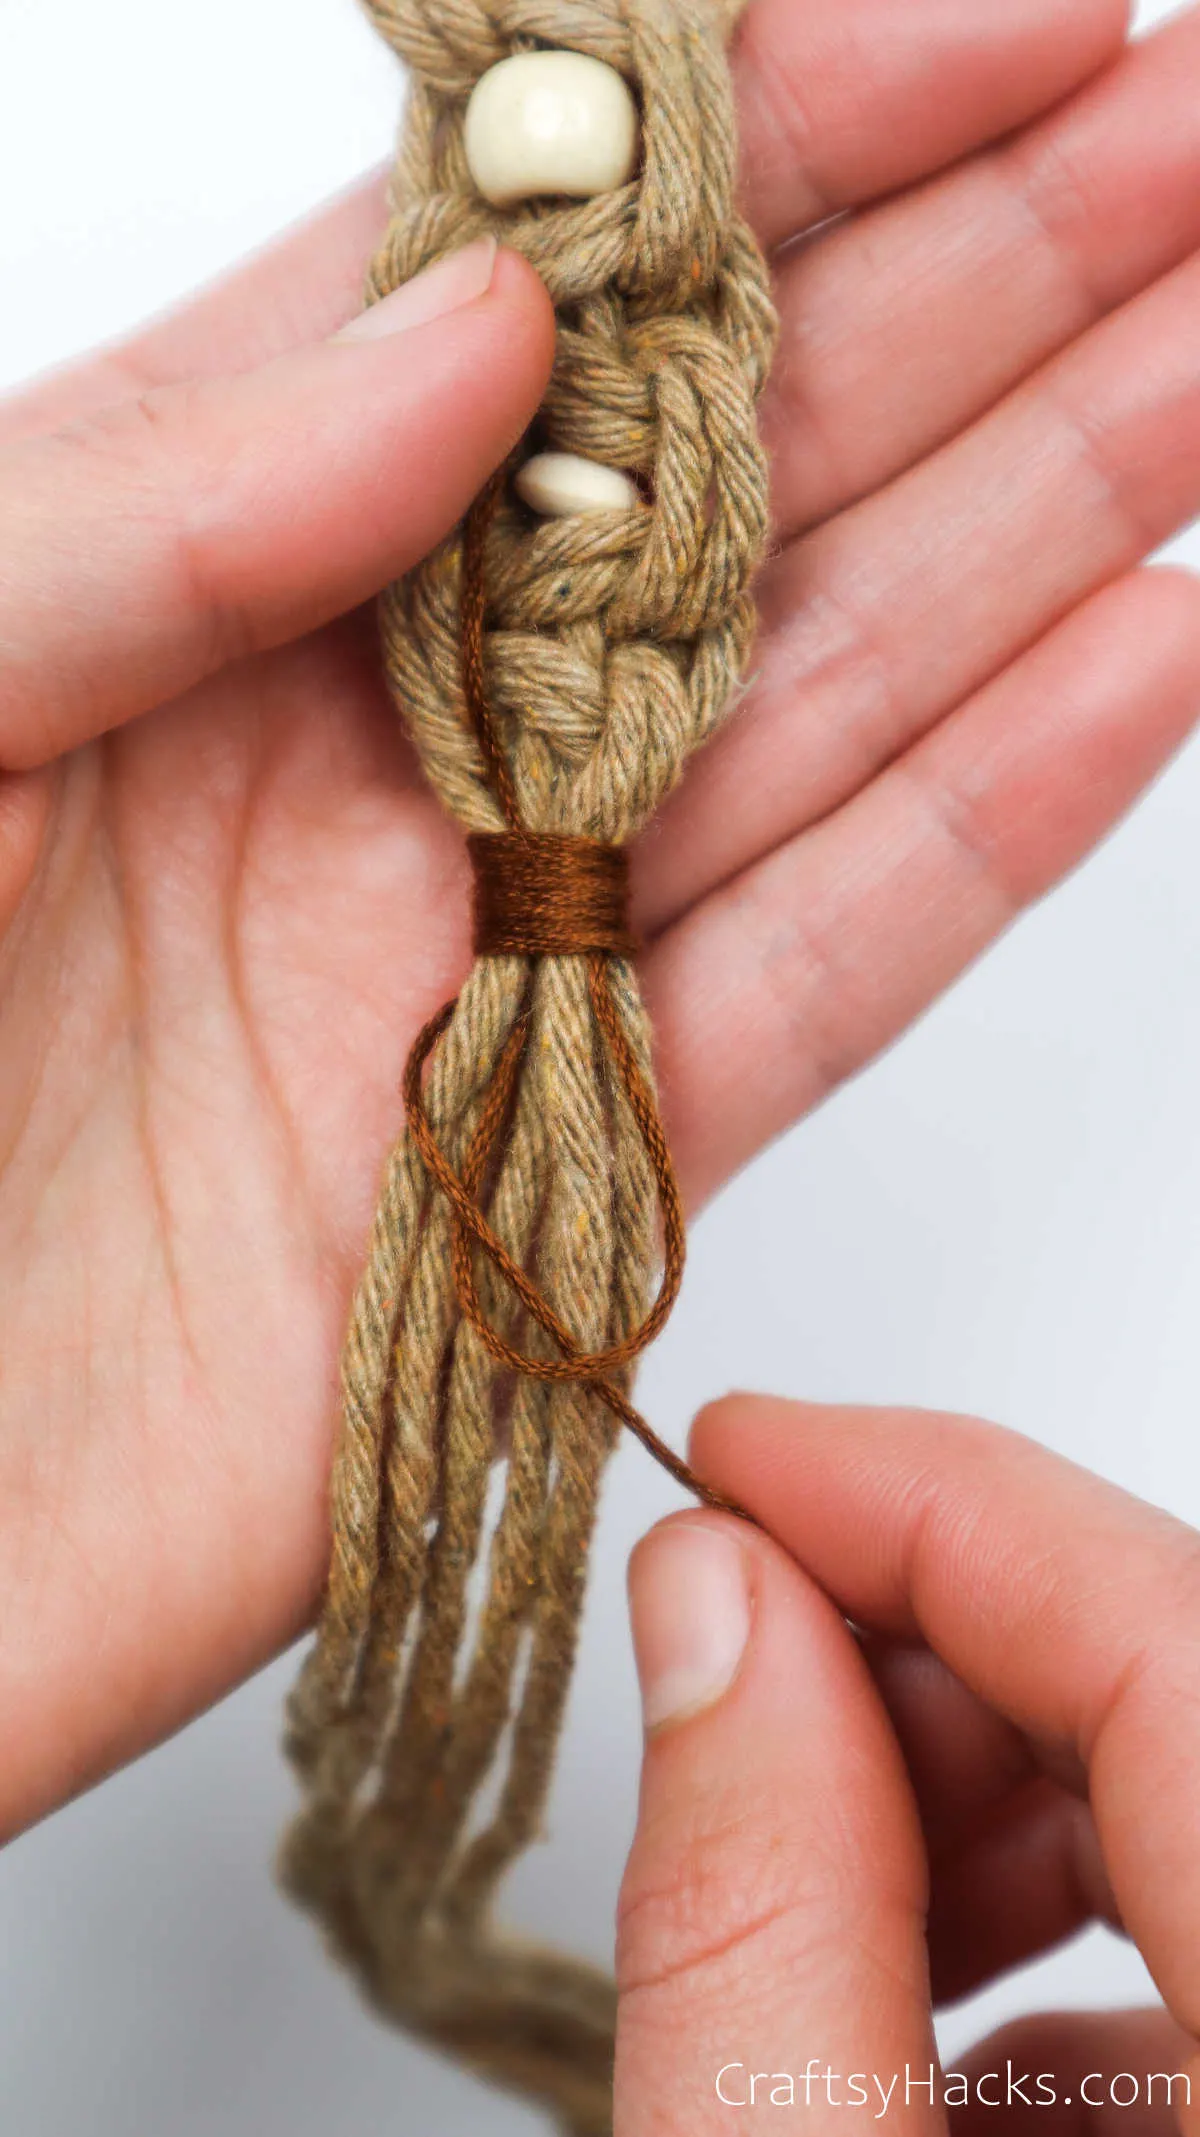 tying thread knot